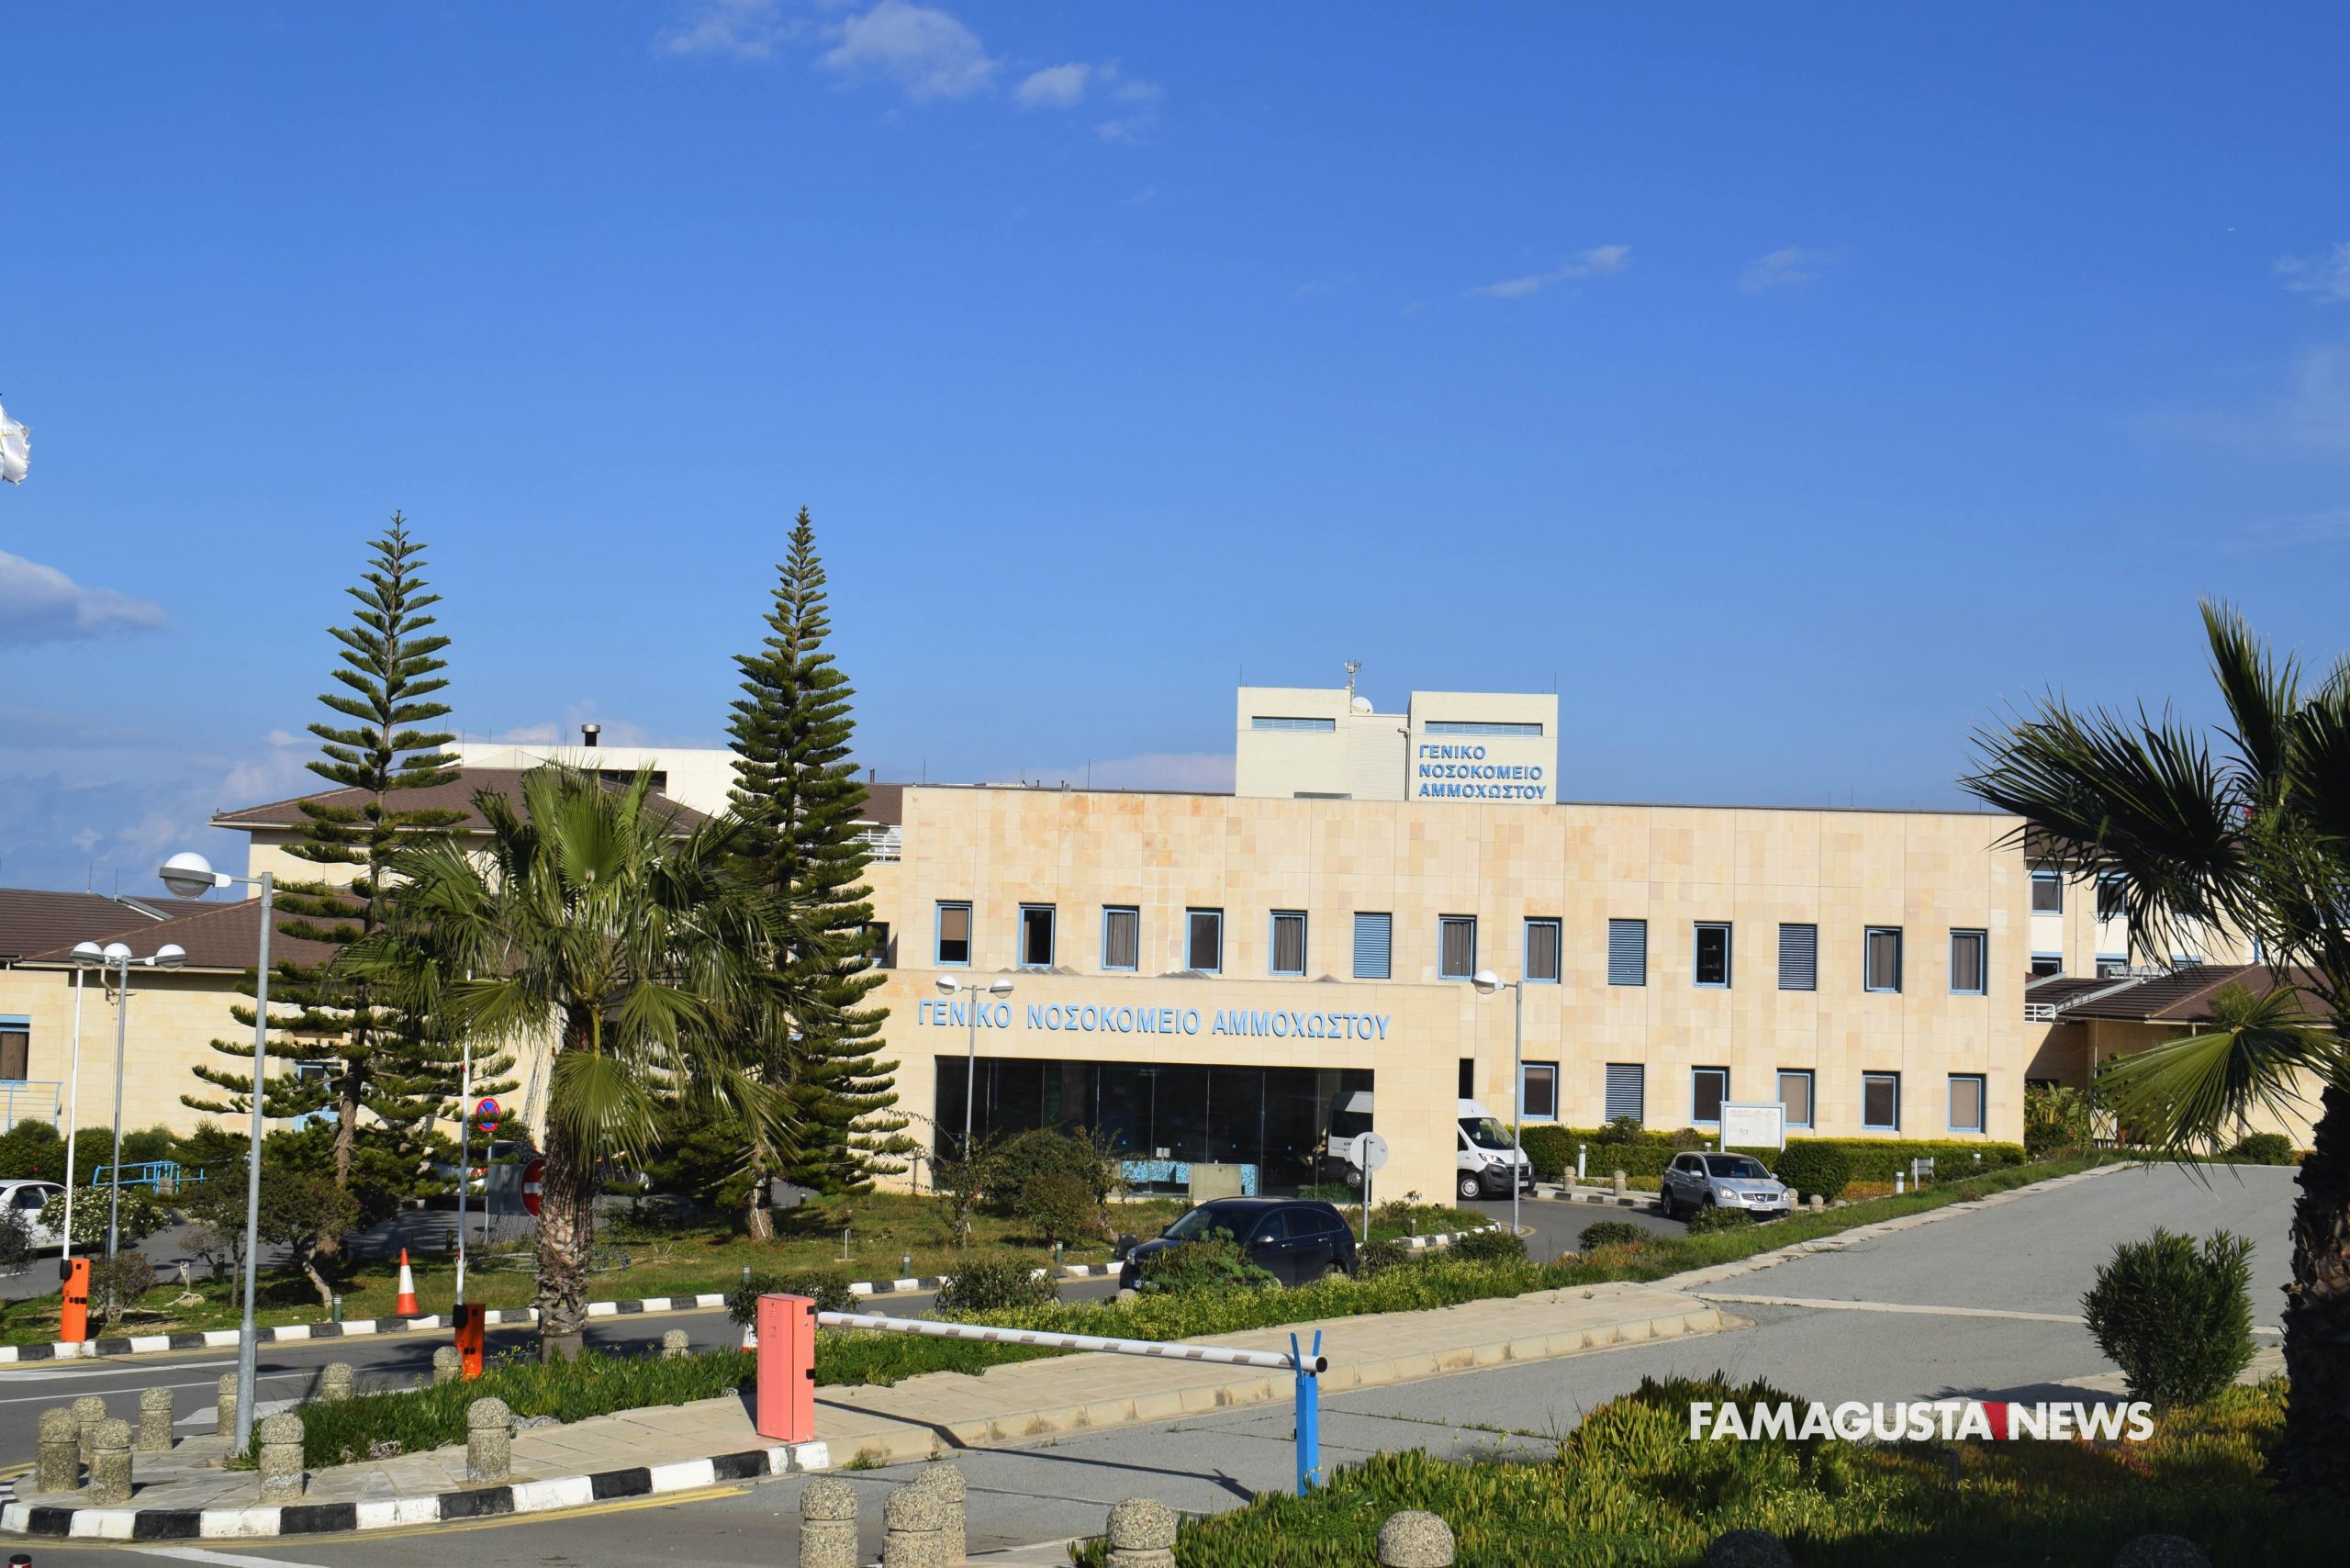 DSC 5705 2 scaled Famagusta General Hospital